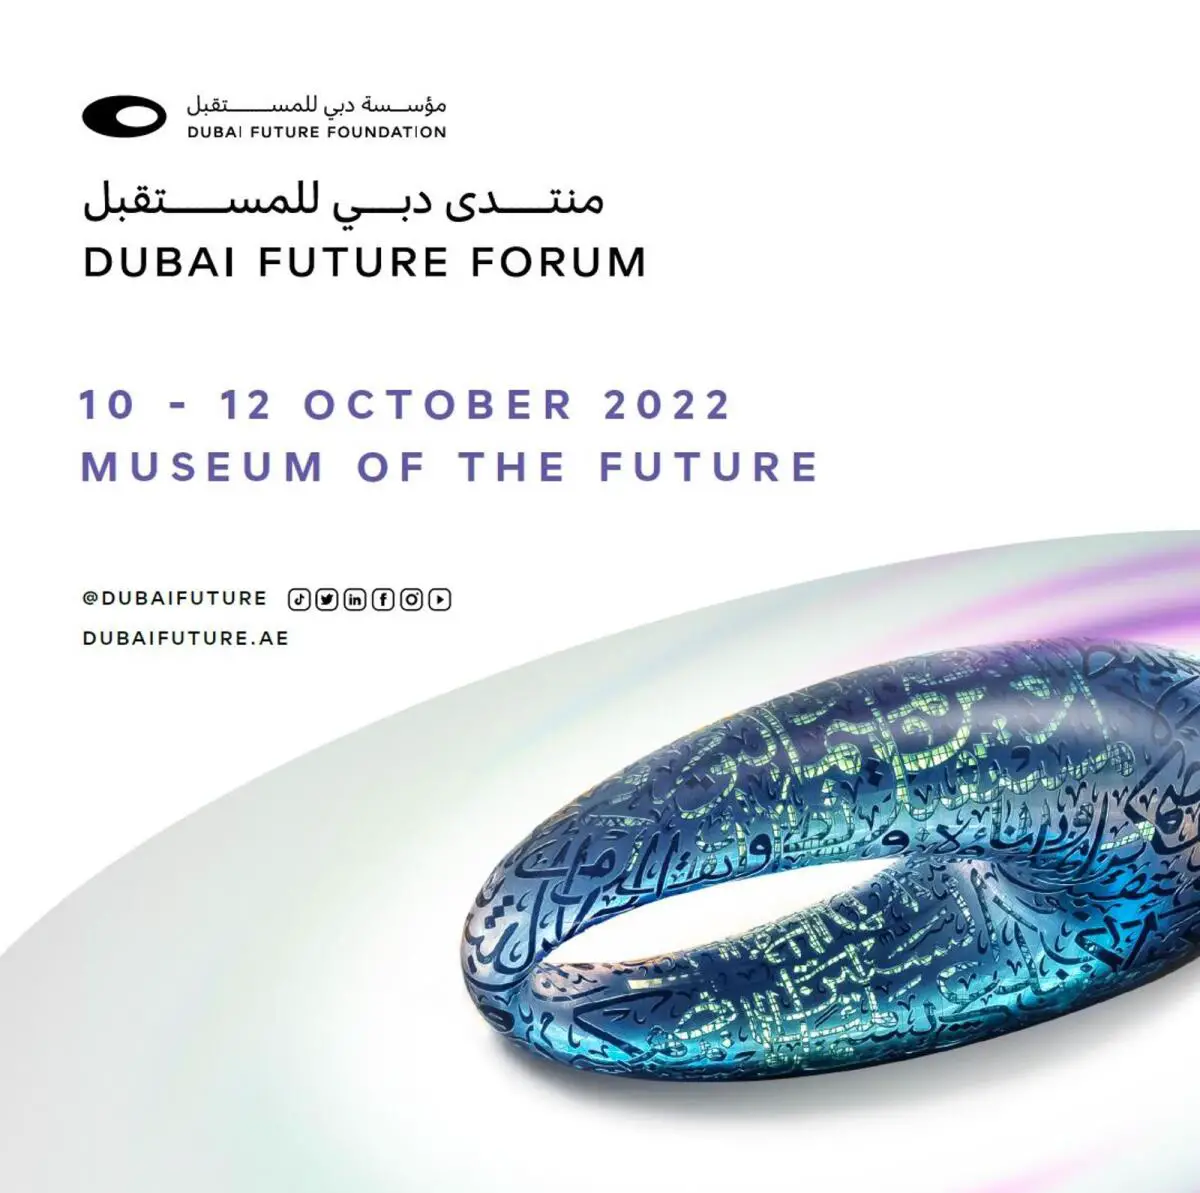 Dubai to host world’s largest futurists forum